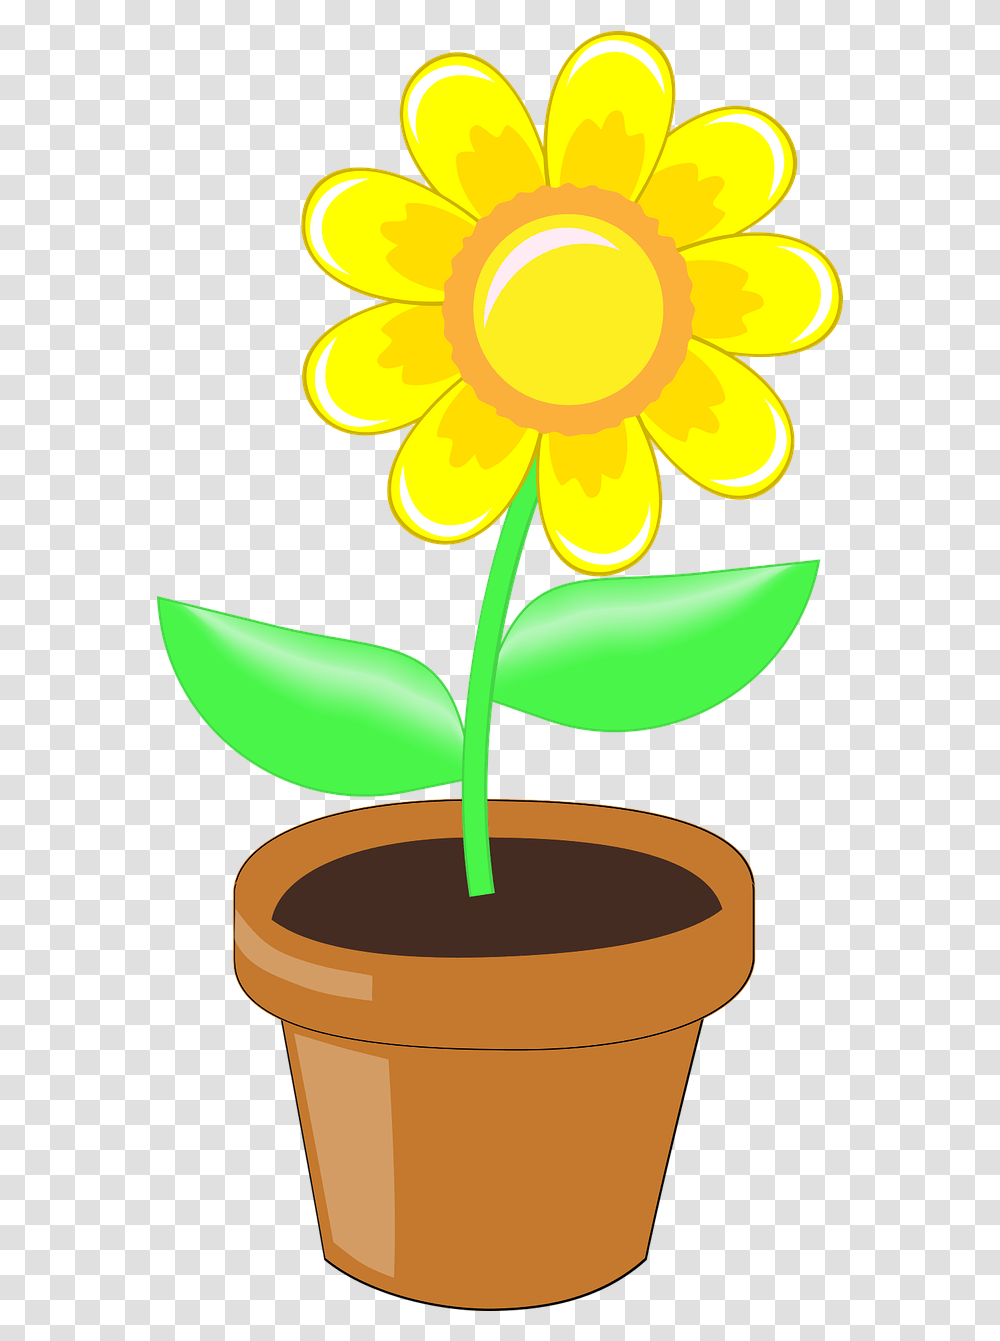 Flower Yellow Nature Free Vector Graphic On Pixabay Gambar Pot Dan Bunga, Plant, Leaf, Pottery, Jar Transparent Png